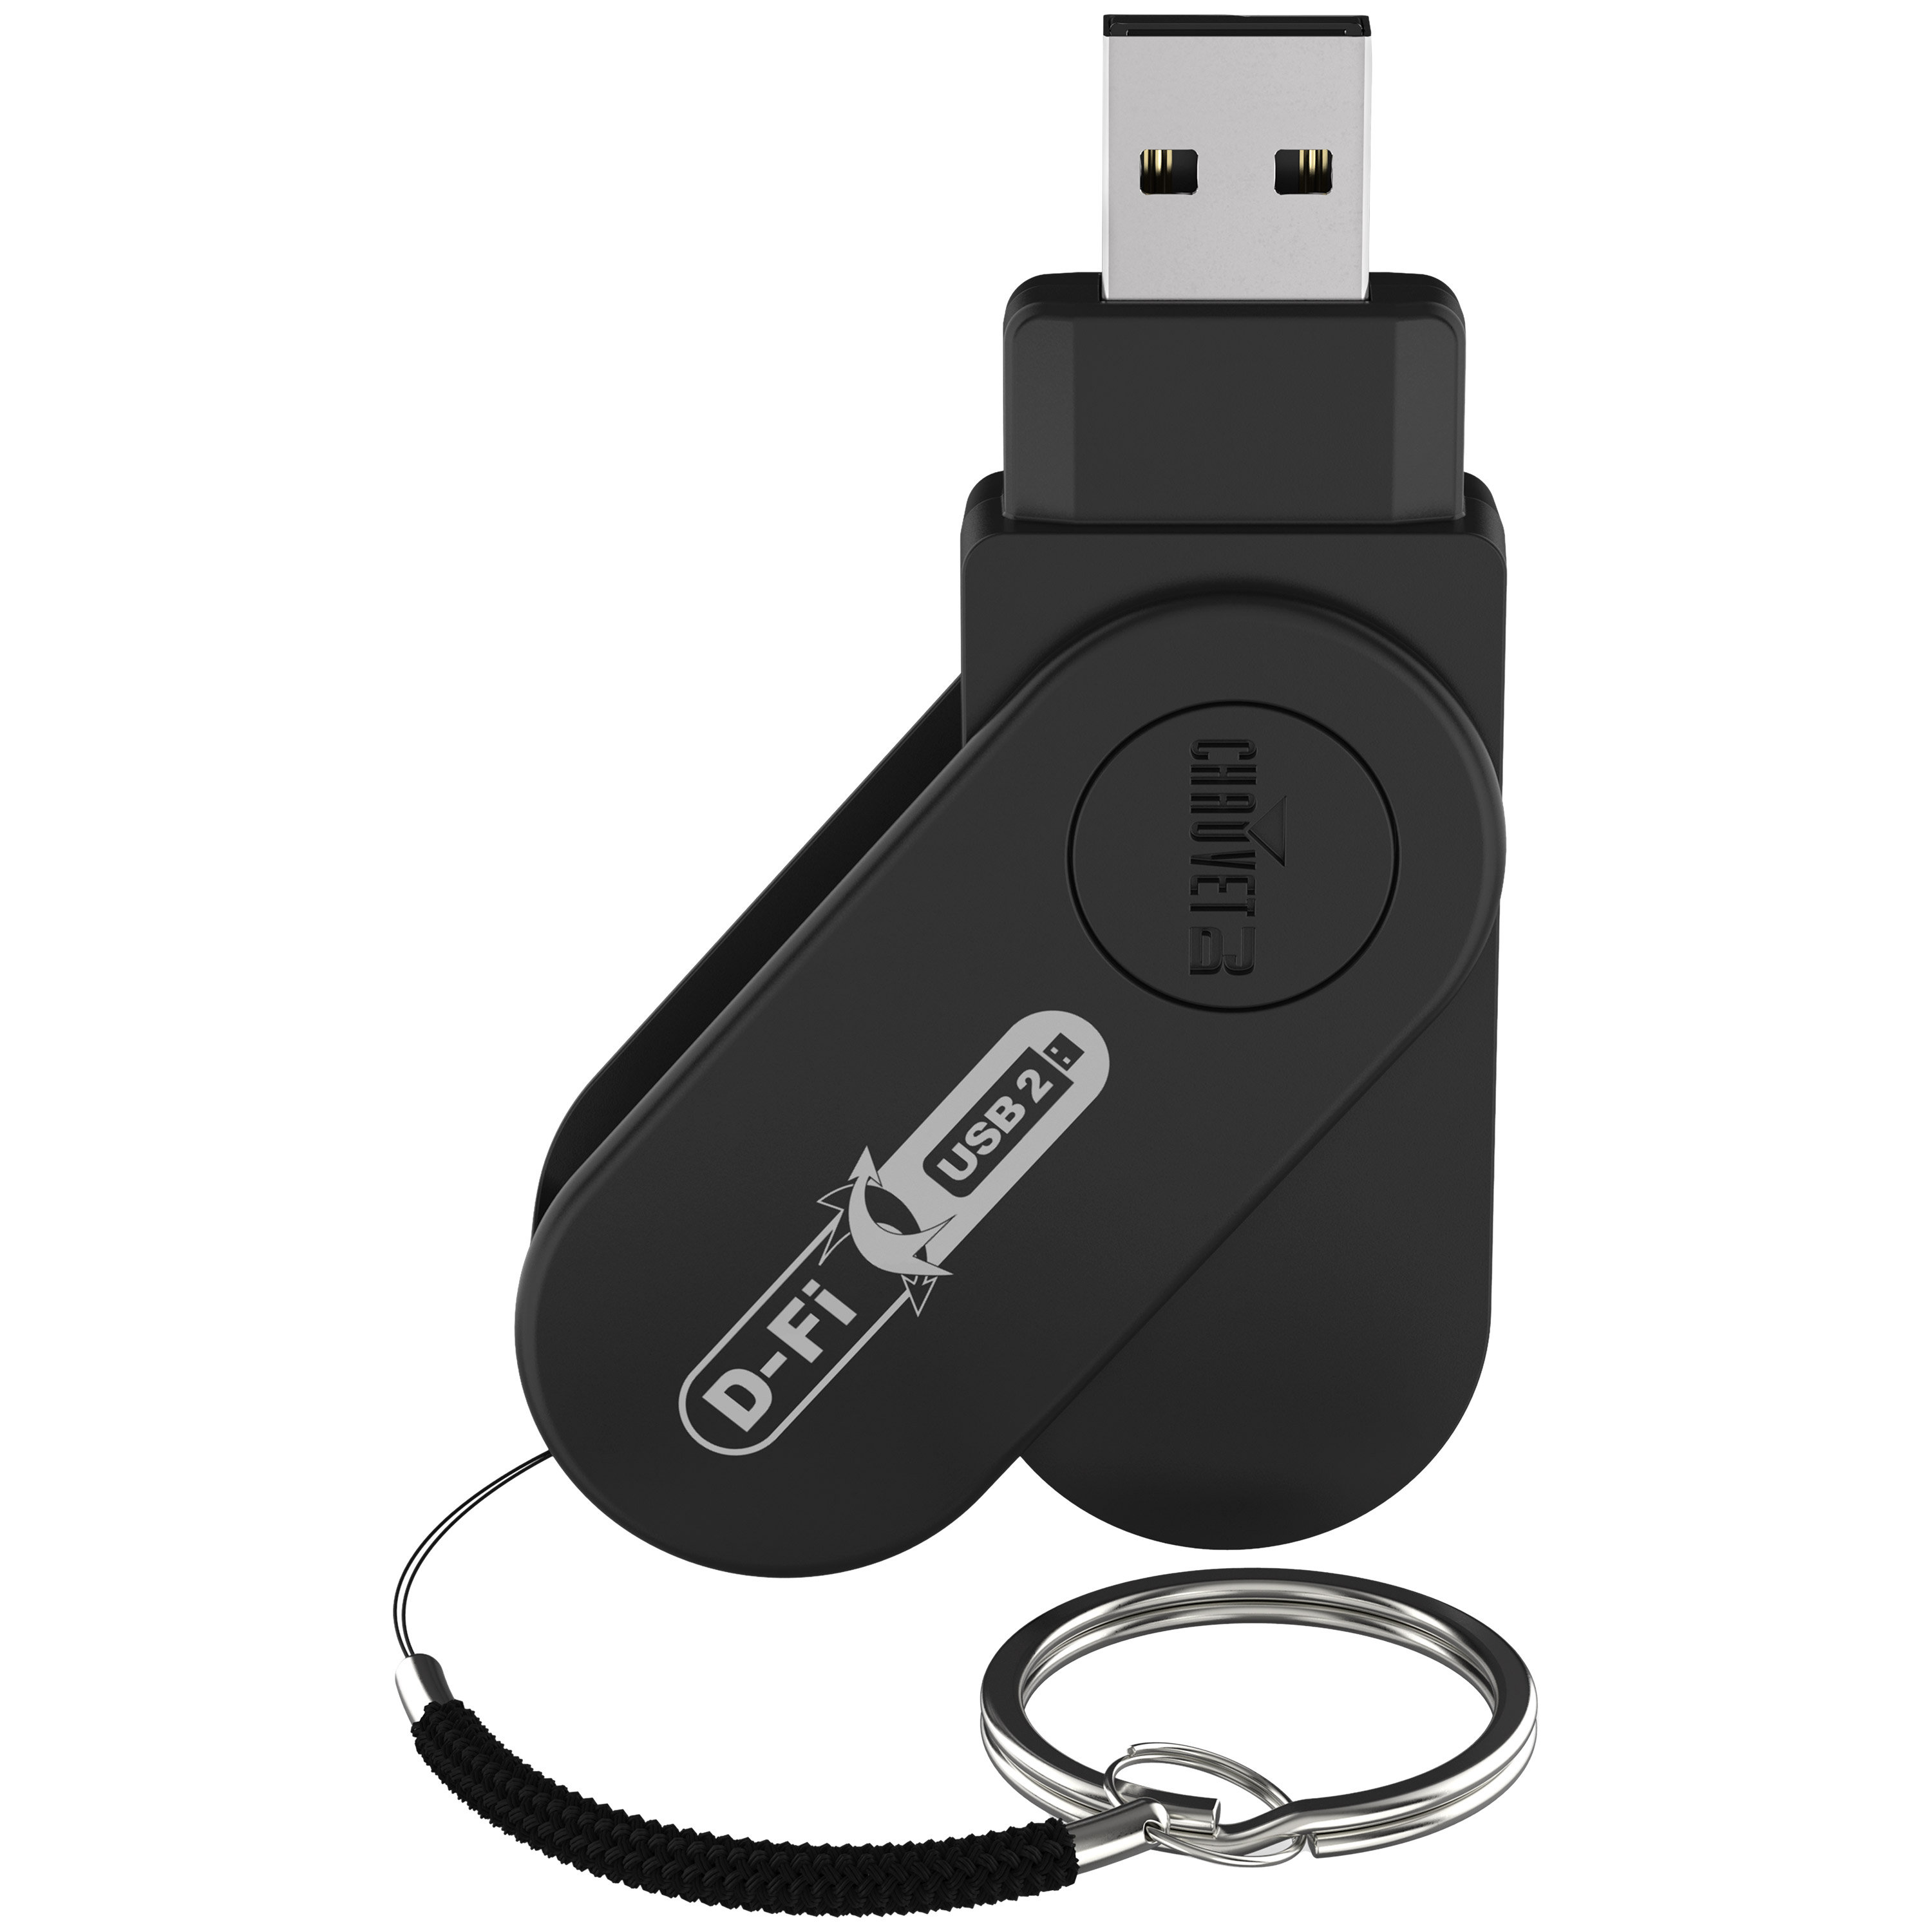 Chauvet D-Fi USB 2